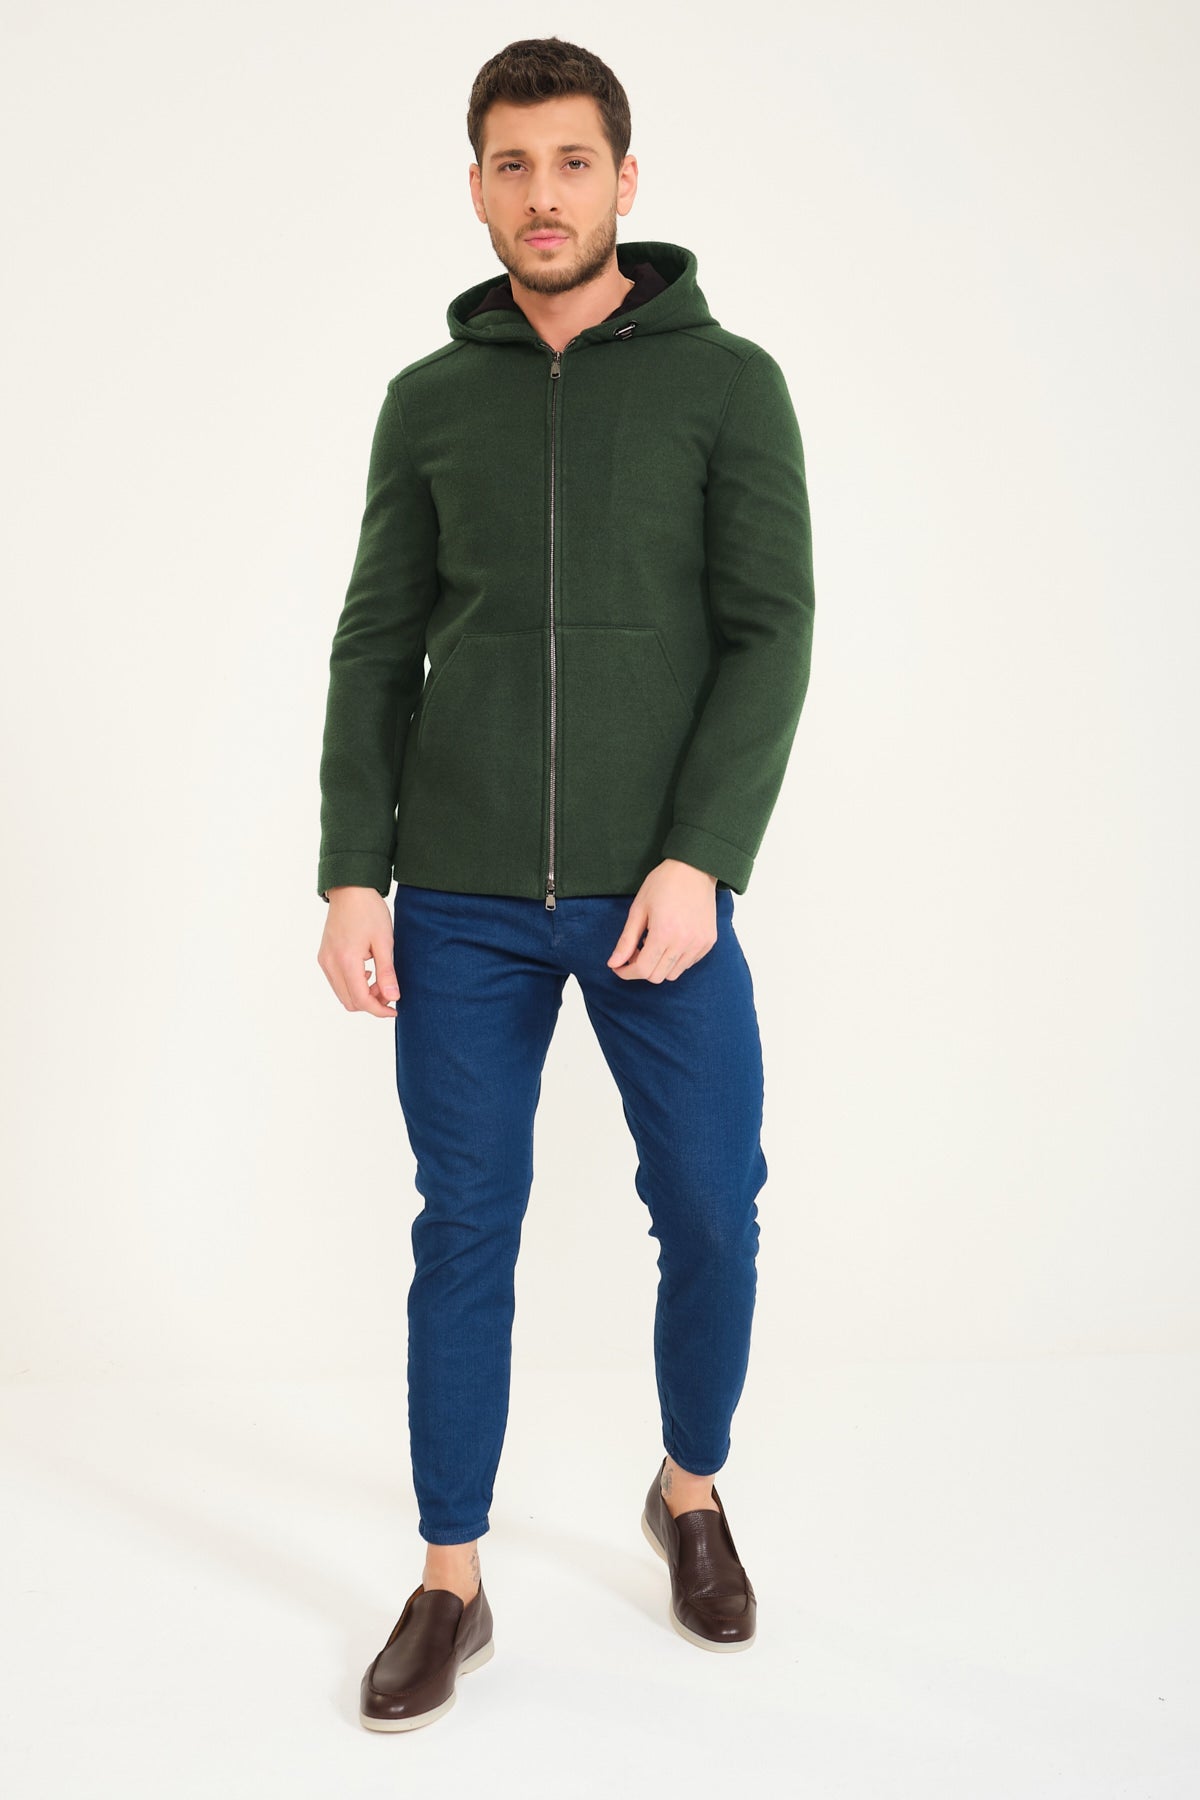 Sherwood Green Wool Coat